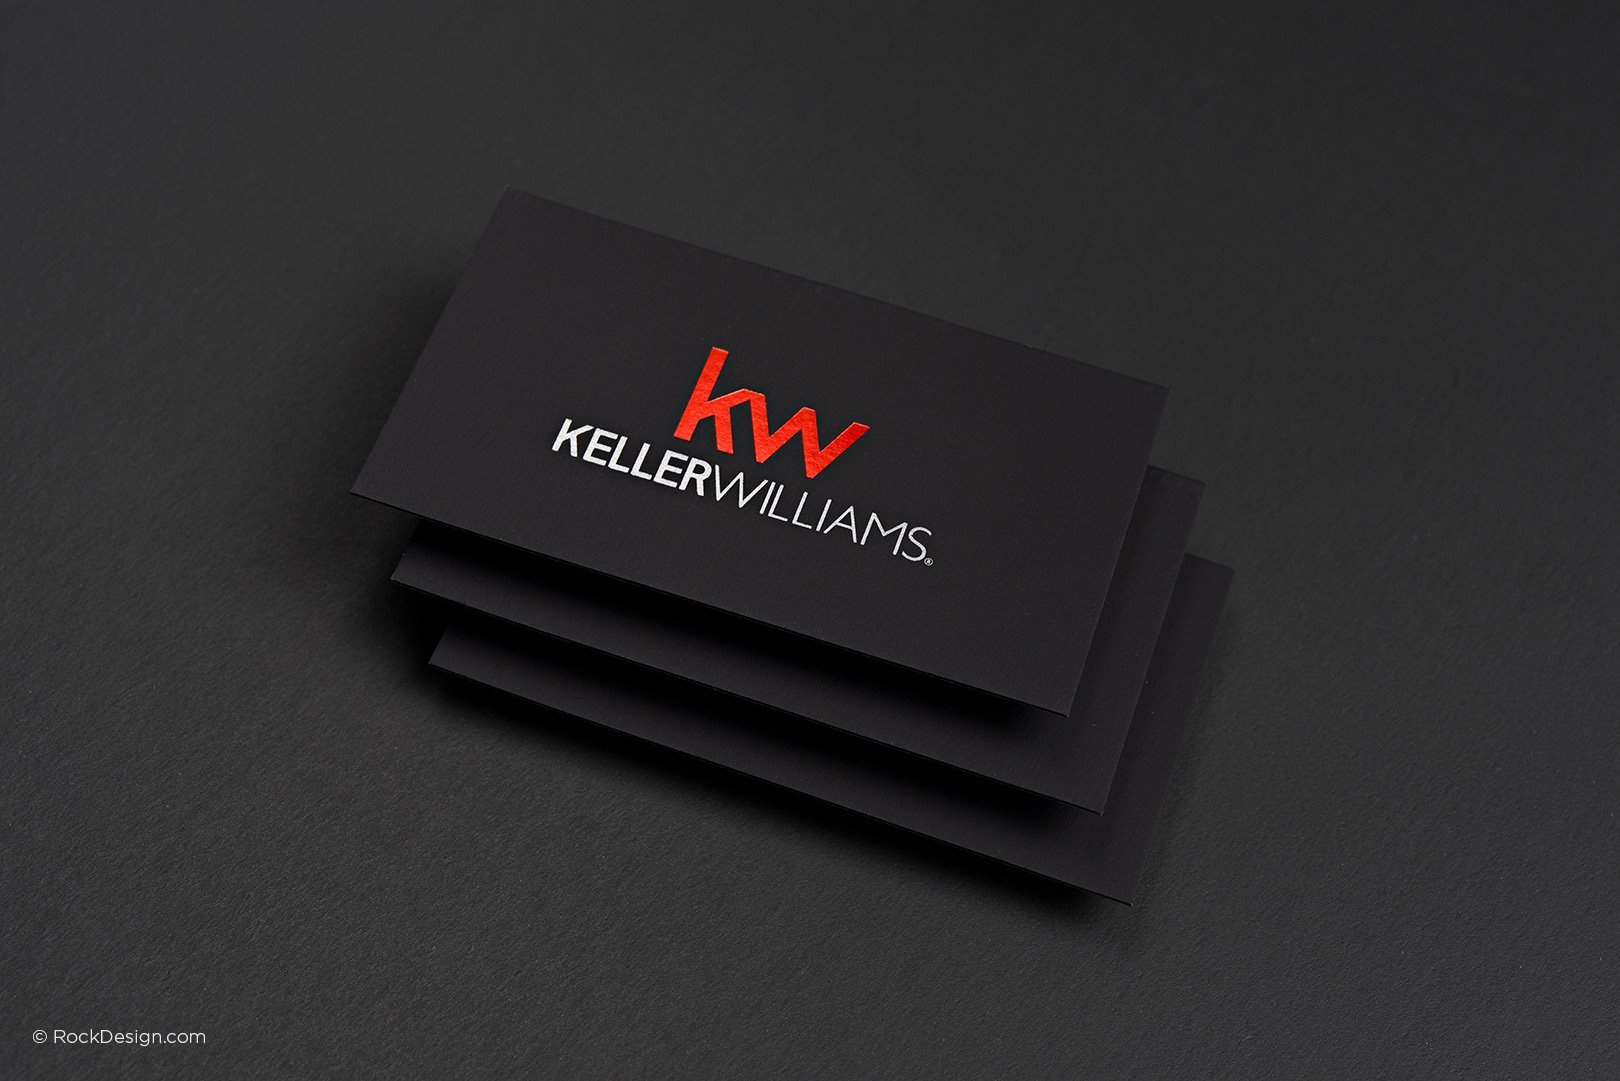 Free Keller Williams Business Card Template With Print inside Keller Willia...